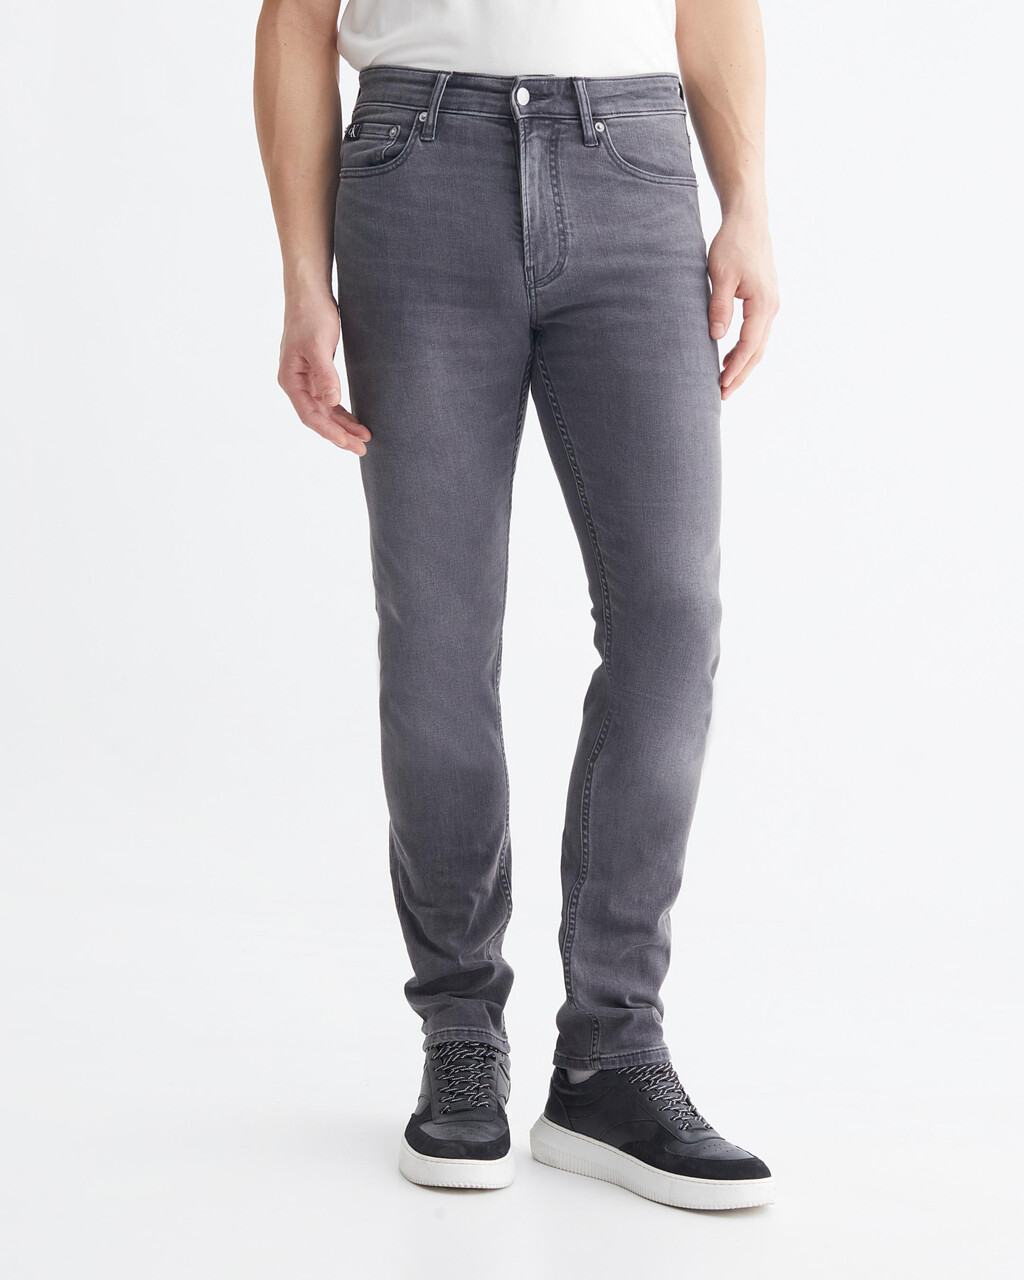 RECONSIDERED 灰色彈性修身牛仔褲, Grey, hi-res